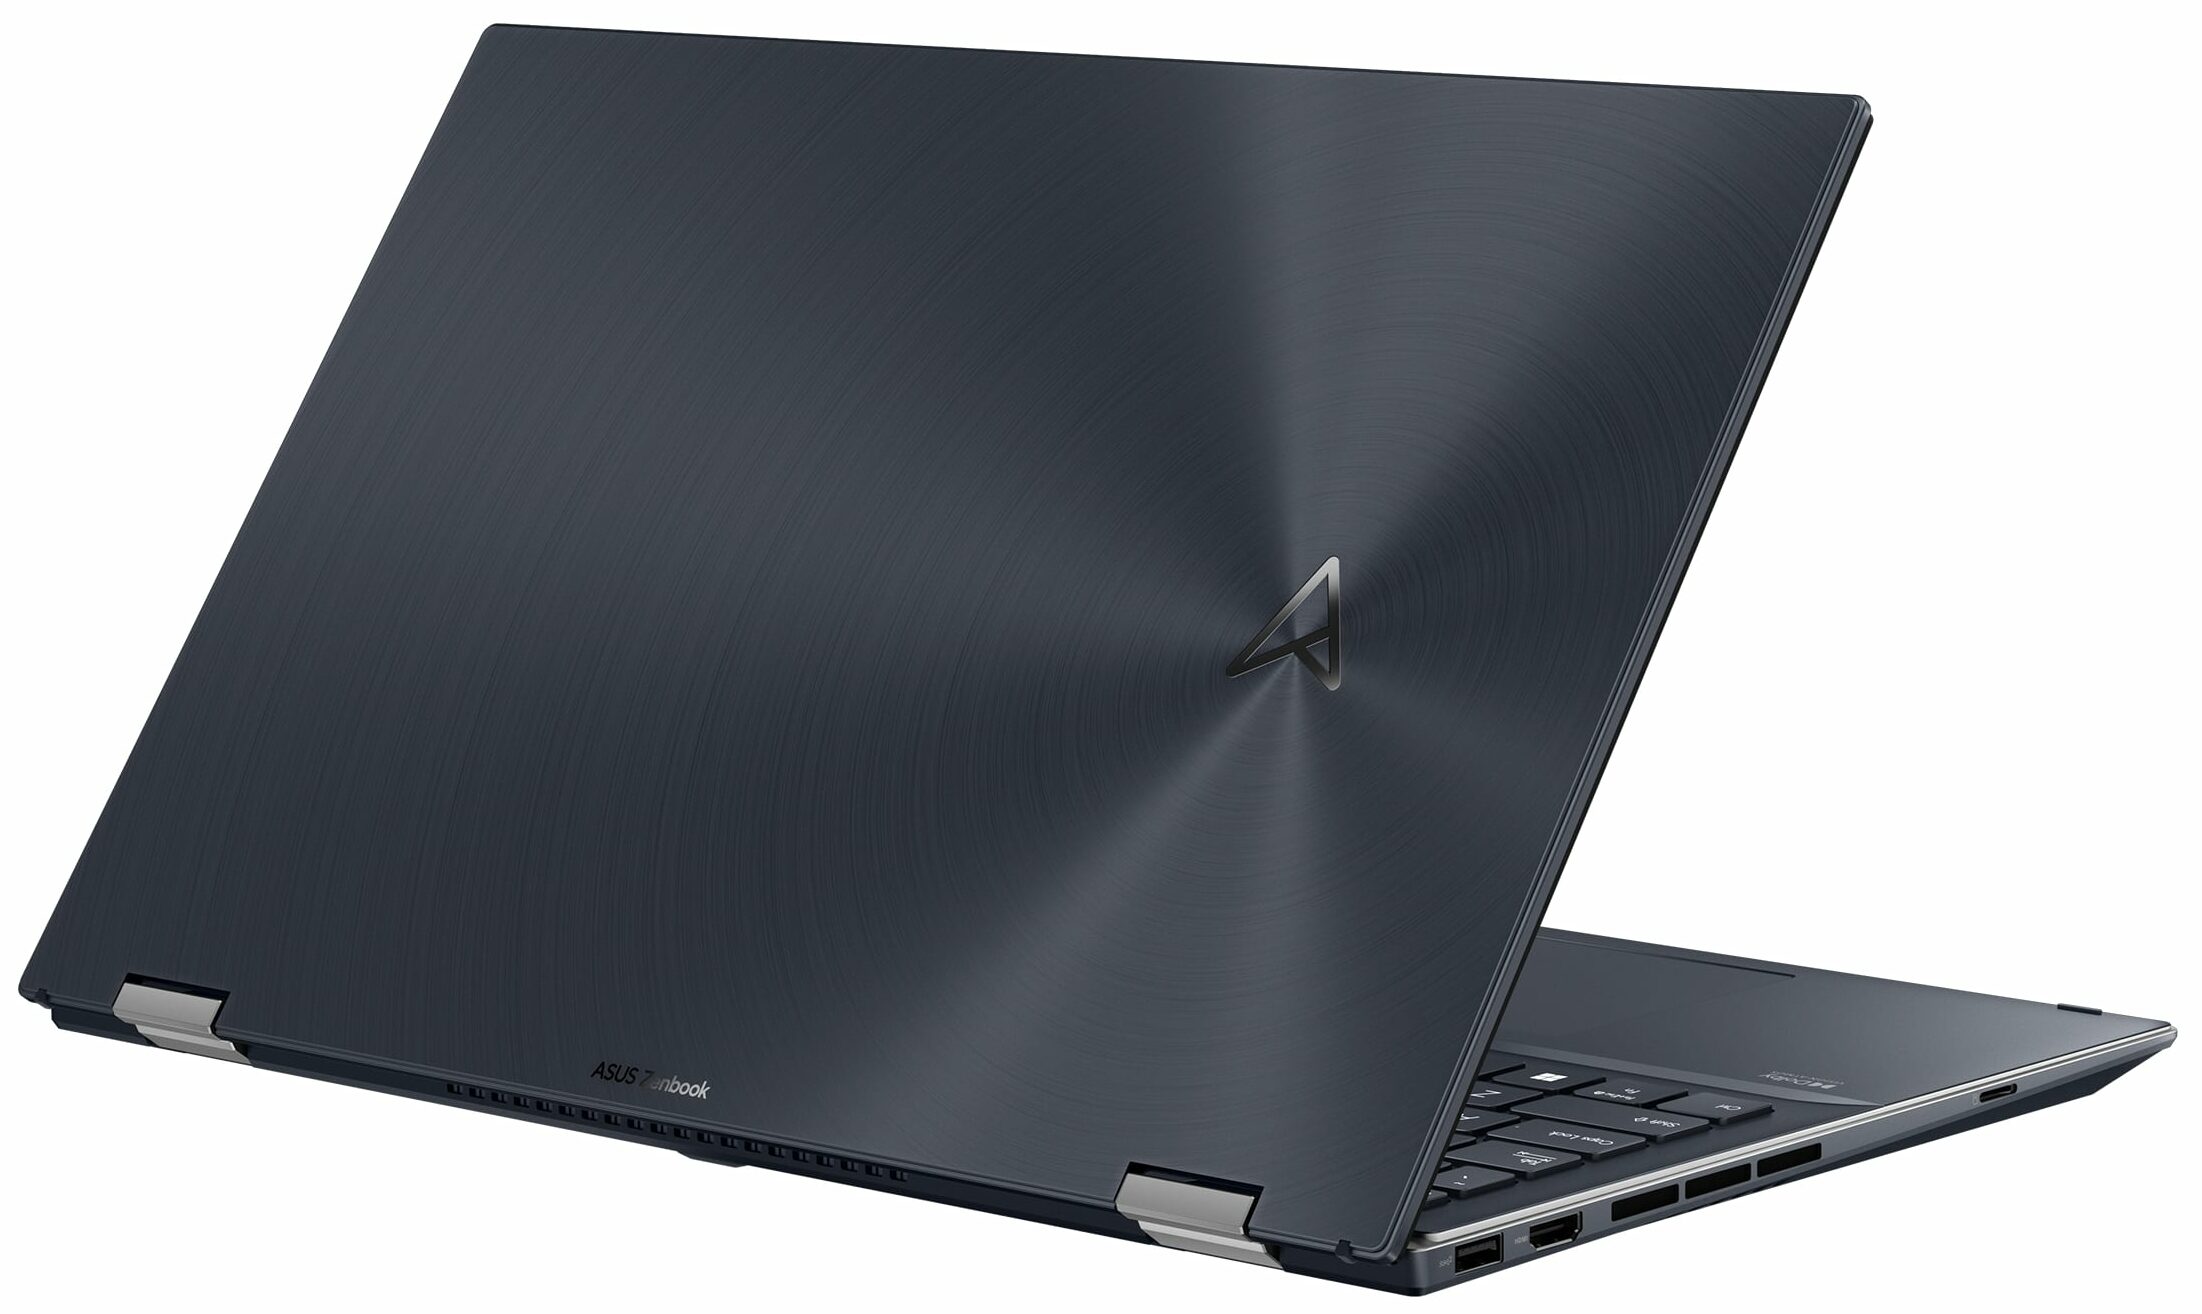 Zenbook Pro 15 Flip OLED ( UP6502, 12th Gen Intel)｜노트북 크리에이터용｜ASUS 한국